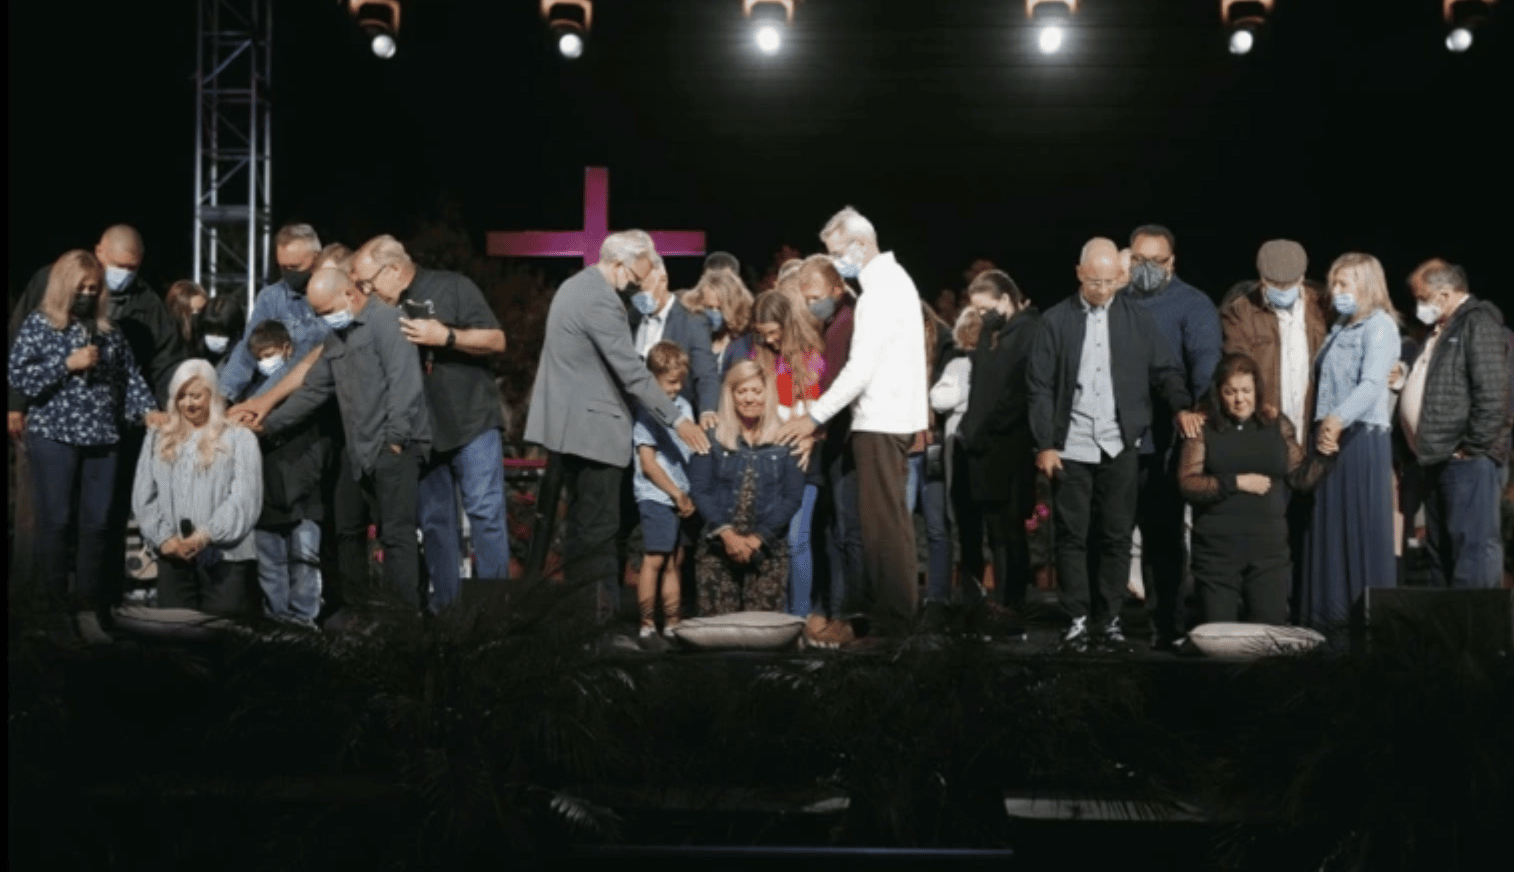 Southern Baptist Convention expels Saddleback Church over ordination of female pastors